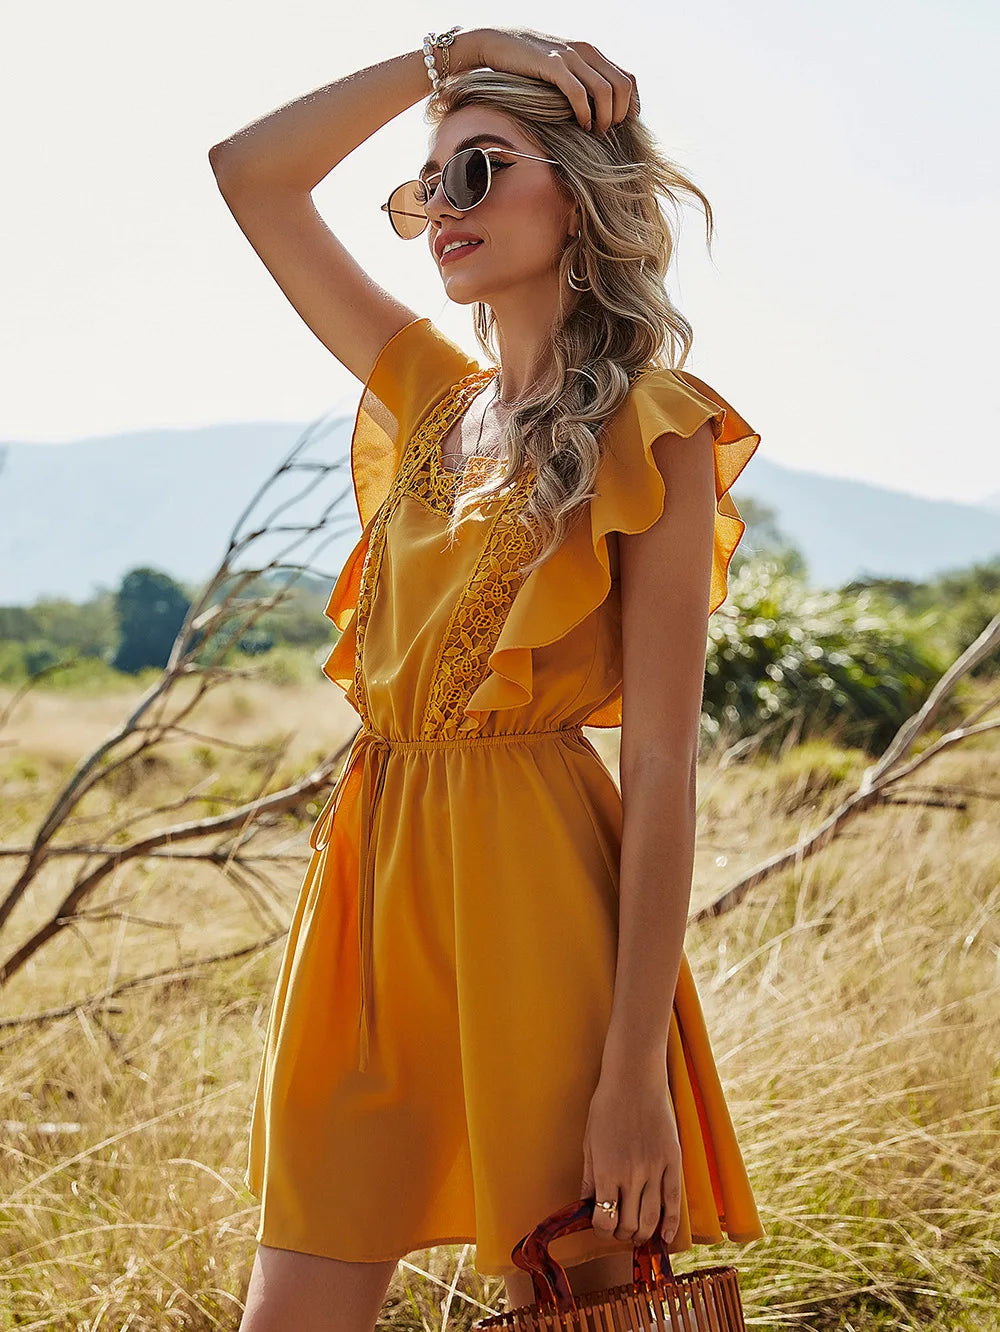 FashionSierra-Ruffles  Short Sleeve  Splice Lace  Mini  Women  Vintage  Yellow  Solid  Backless  Summer Boho Dress